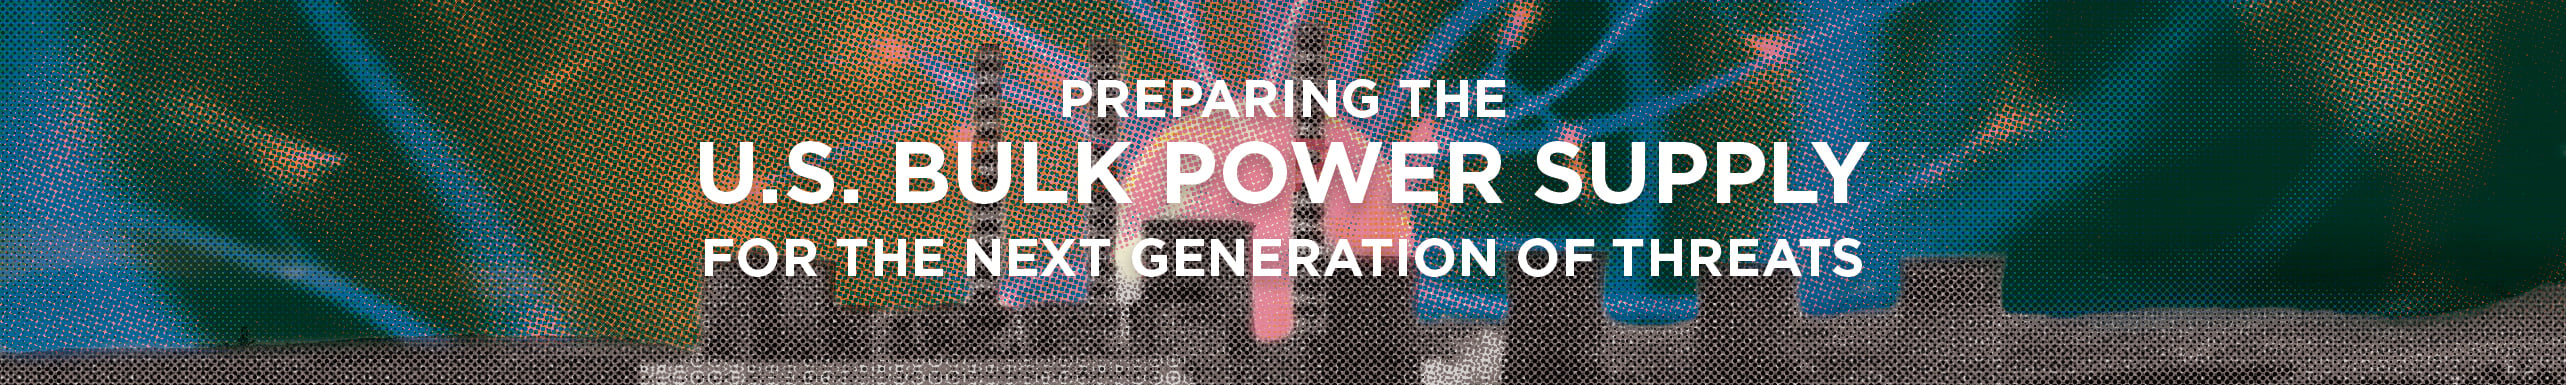 Preparing the U.S. Bulk Power Supply for the Next Generation of Threats